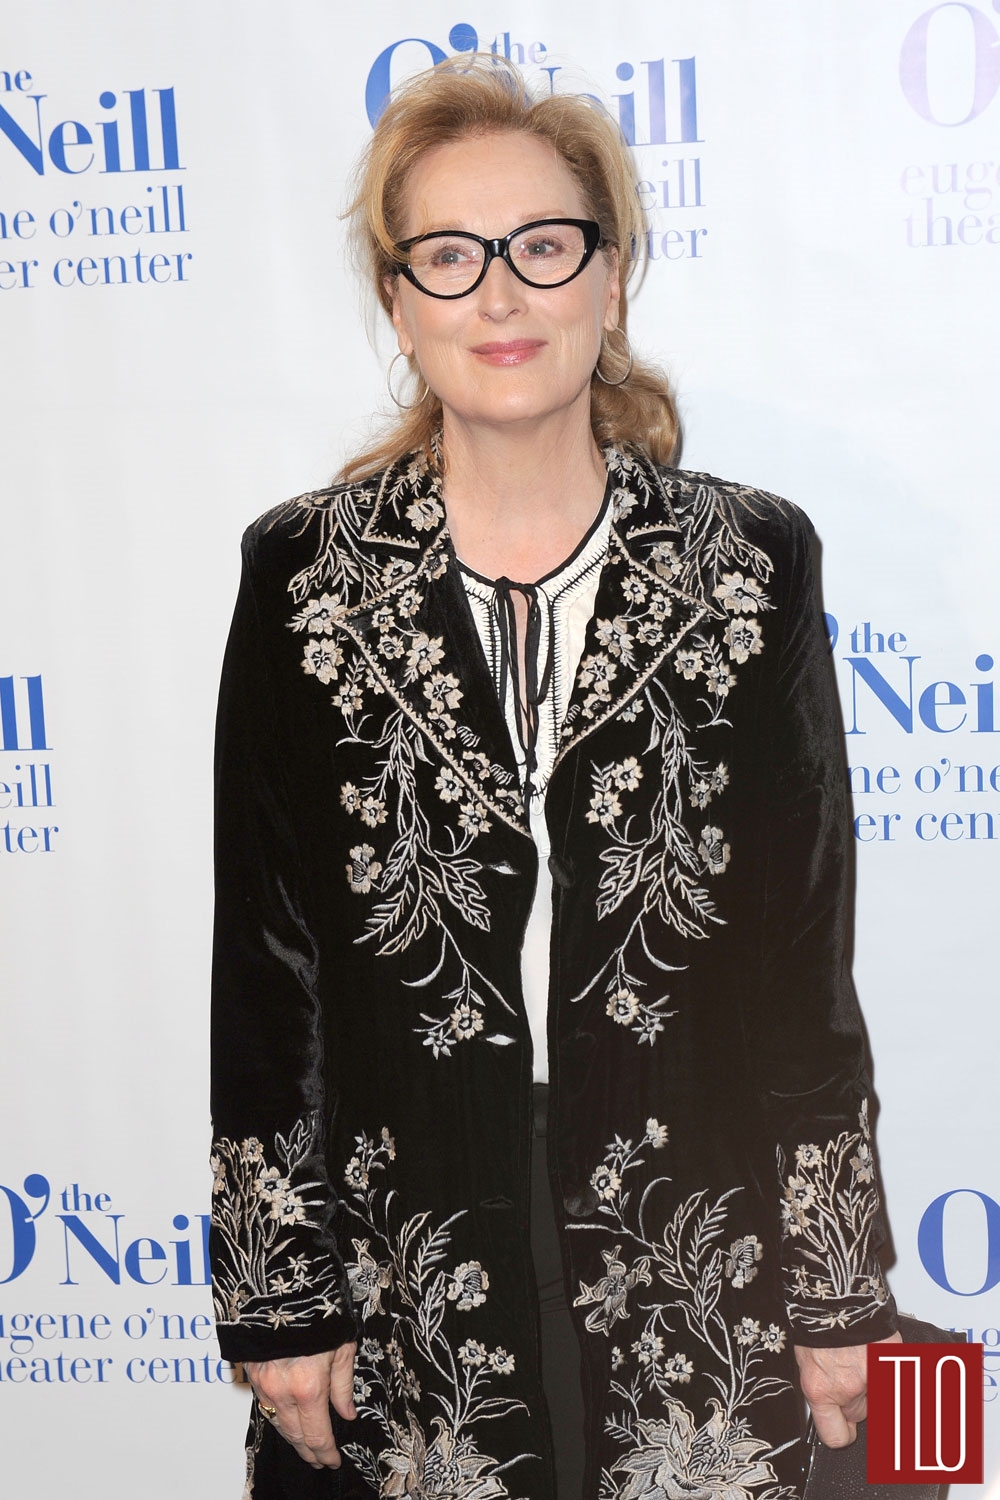 Meryl-Streep-Monte-Cristo-Awards-2014-Tom-Lorenzo-Site-TLO (1)